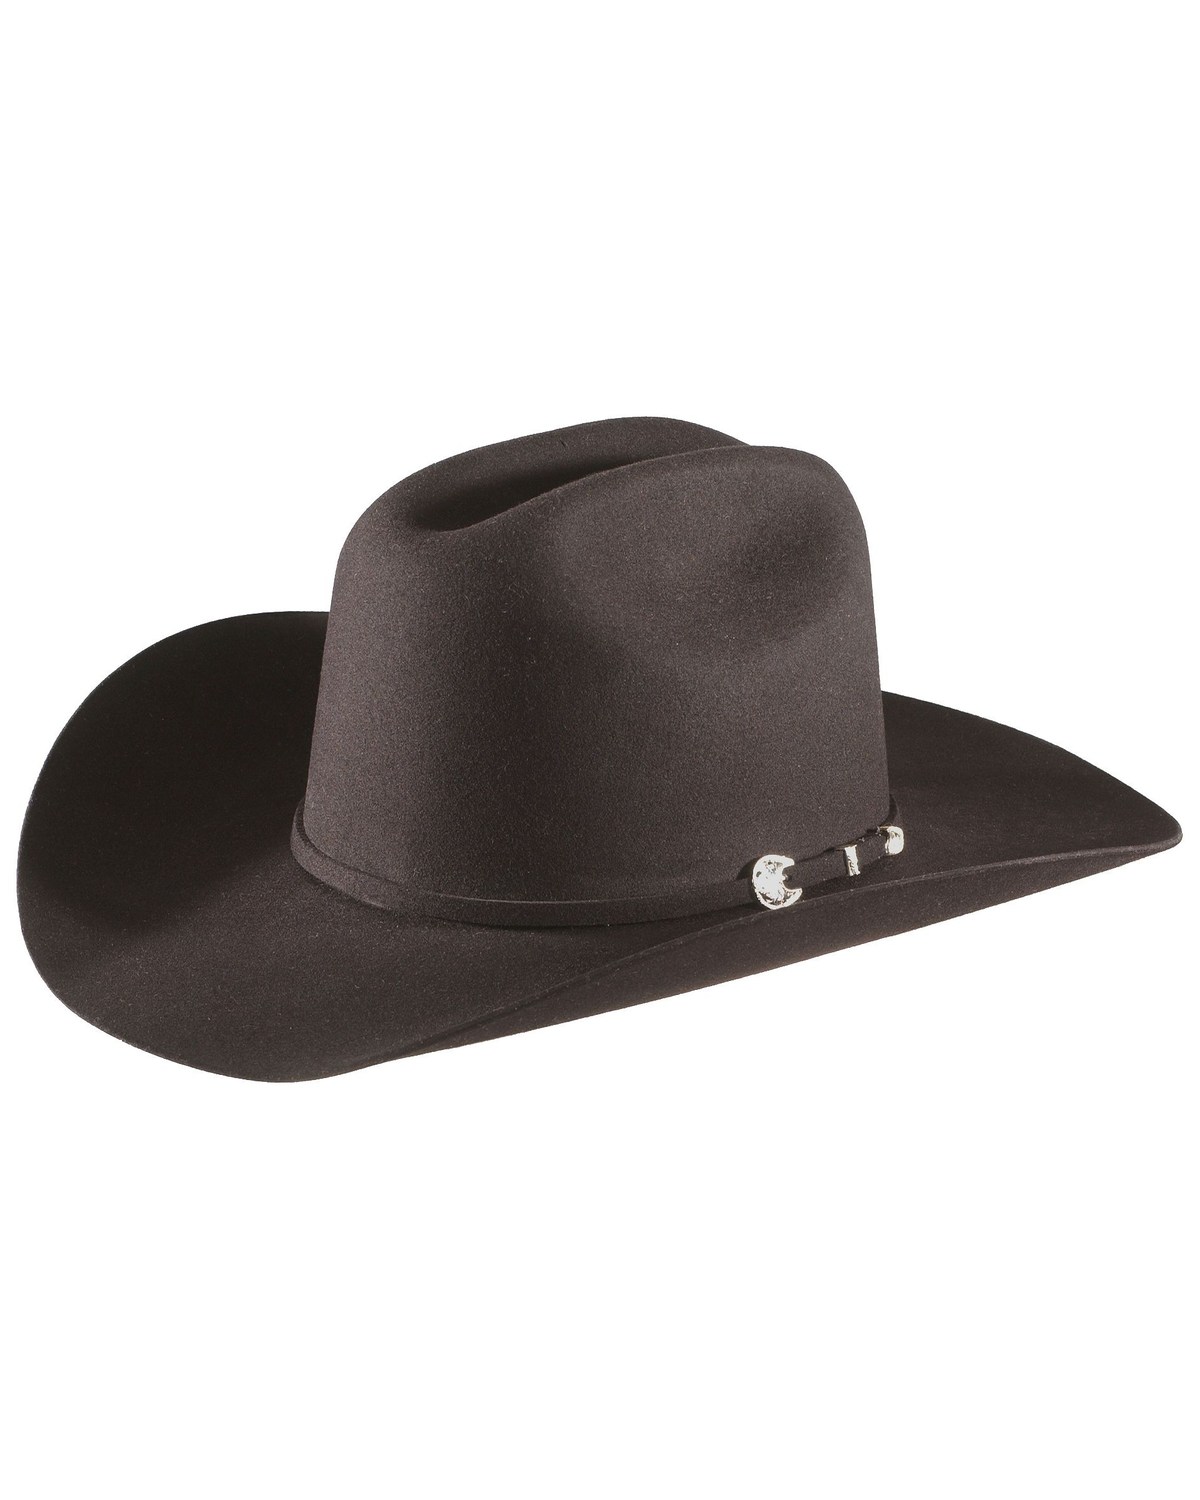 Stetson 4X Corral Felt Hat